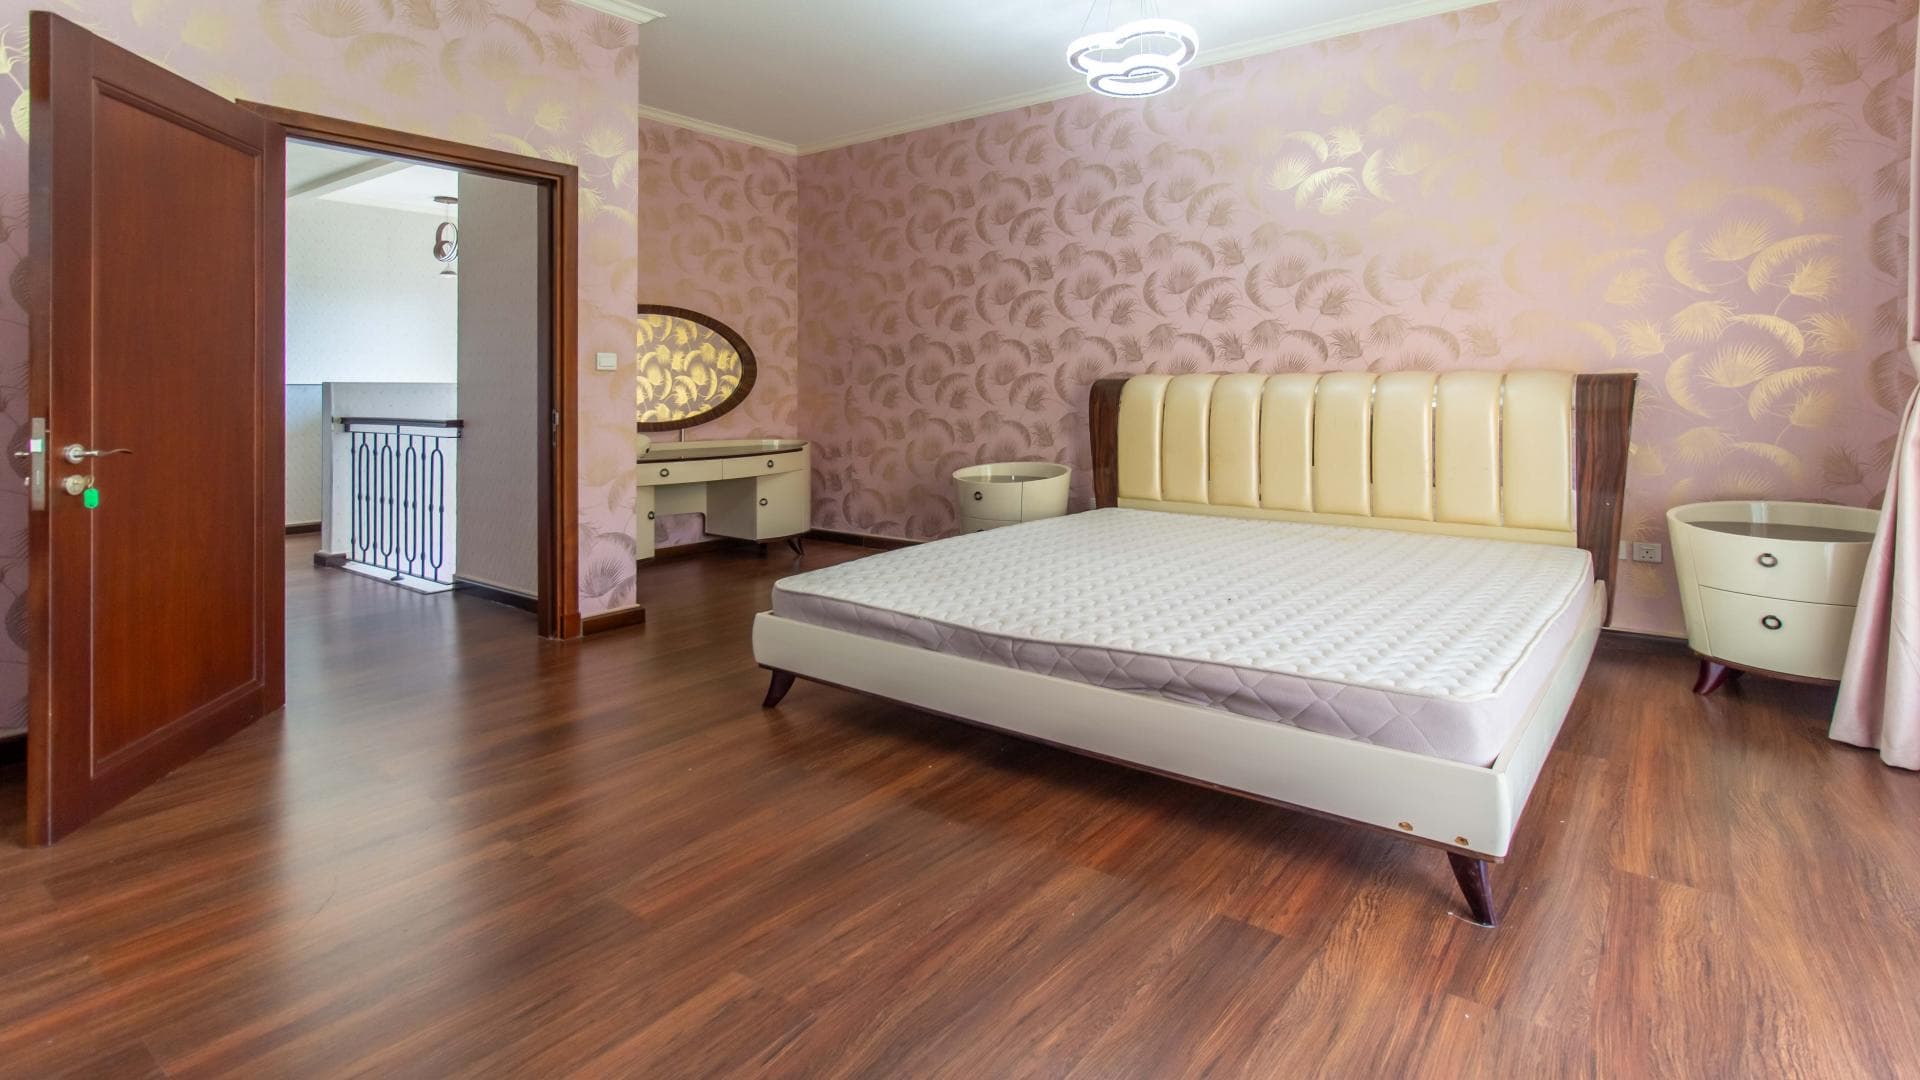 4 Bedroom Villa For Rent Building B Lp14479 3234c121fbadd400.jpg